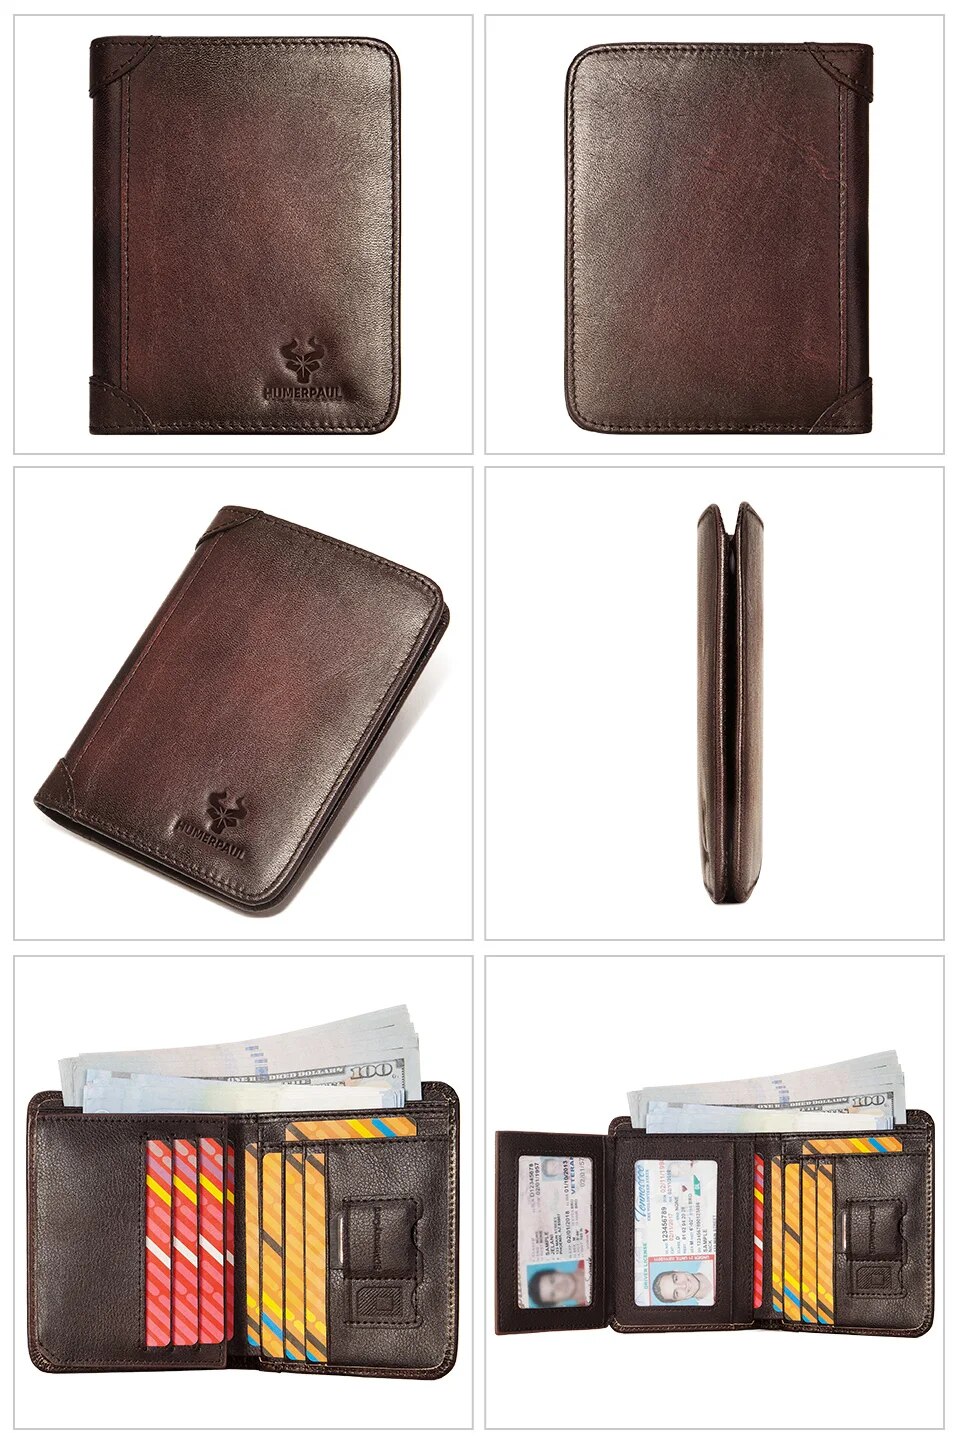 come4buy.com-Gason Wallet RFID Slim Multi Function Money Bag